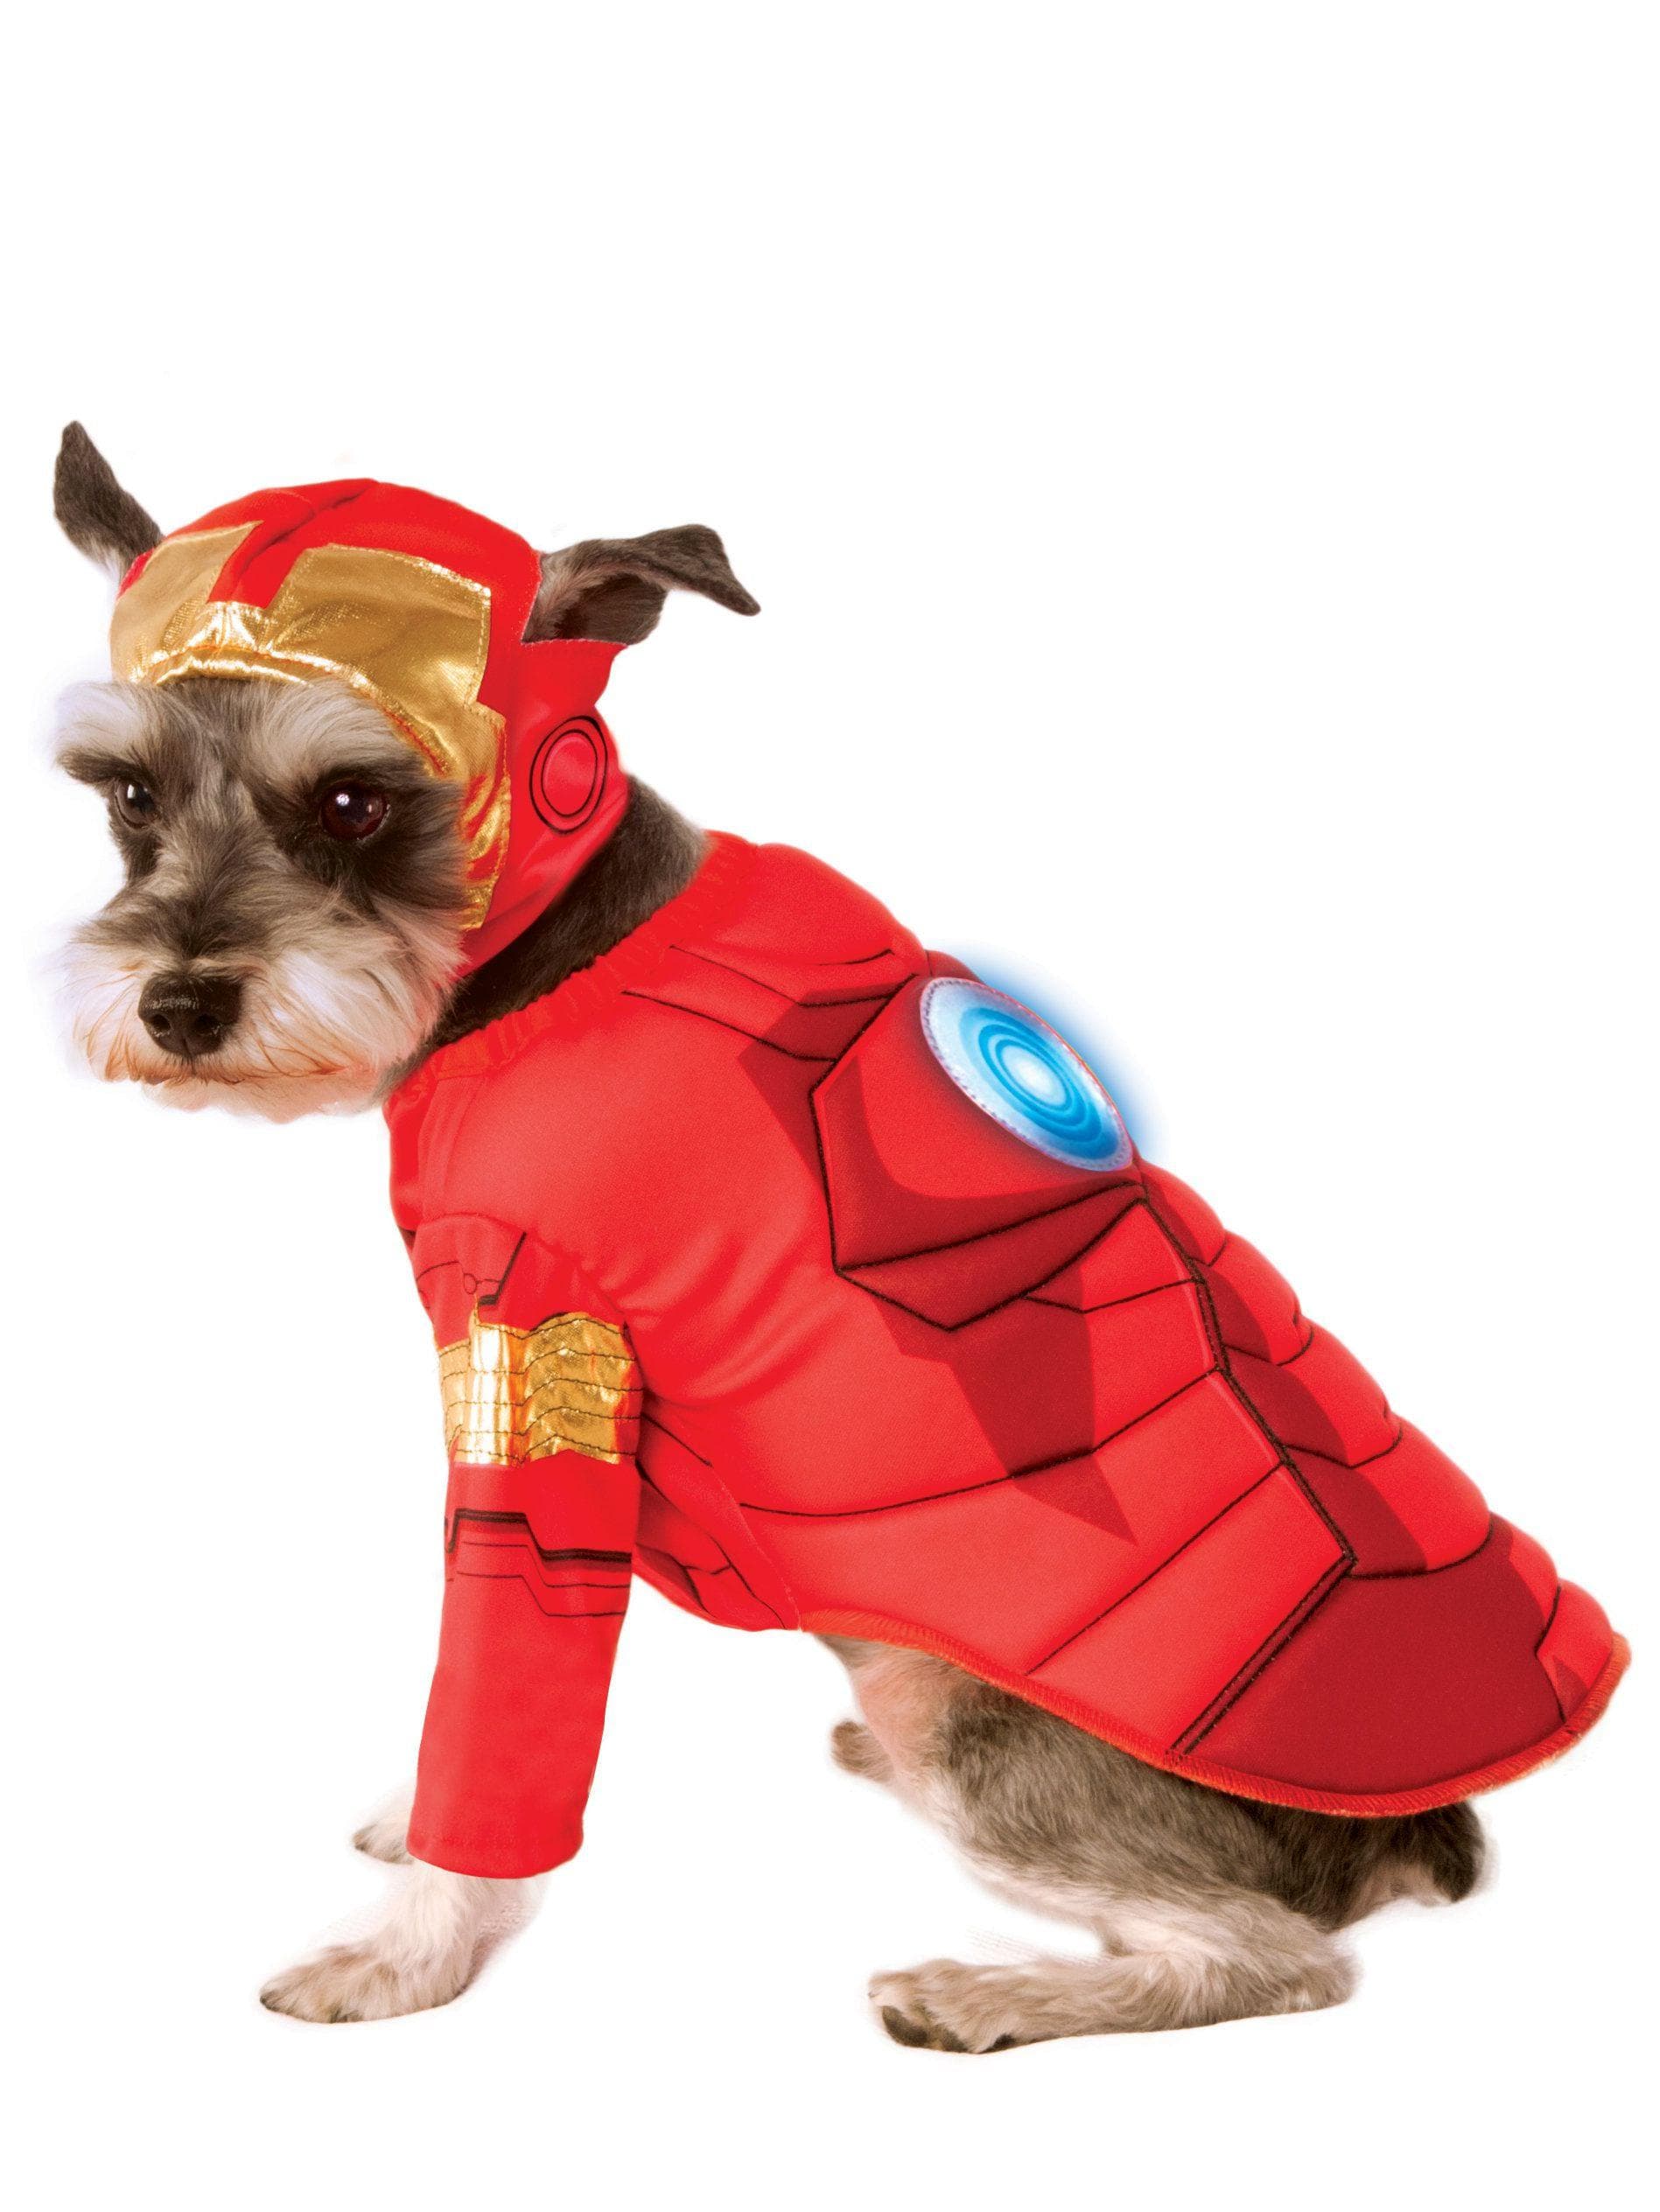 Avengers Iron Man Pet Costume - costumes.com